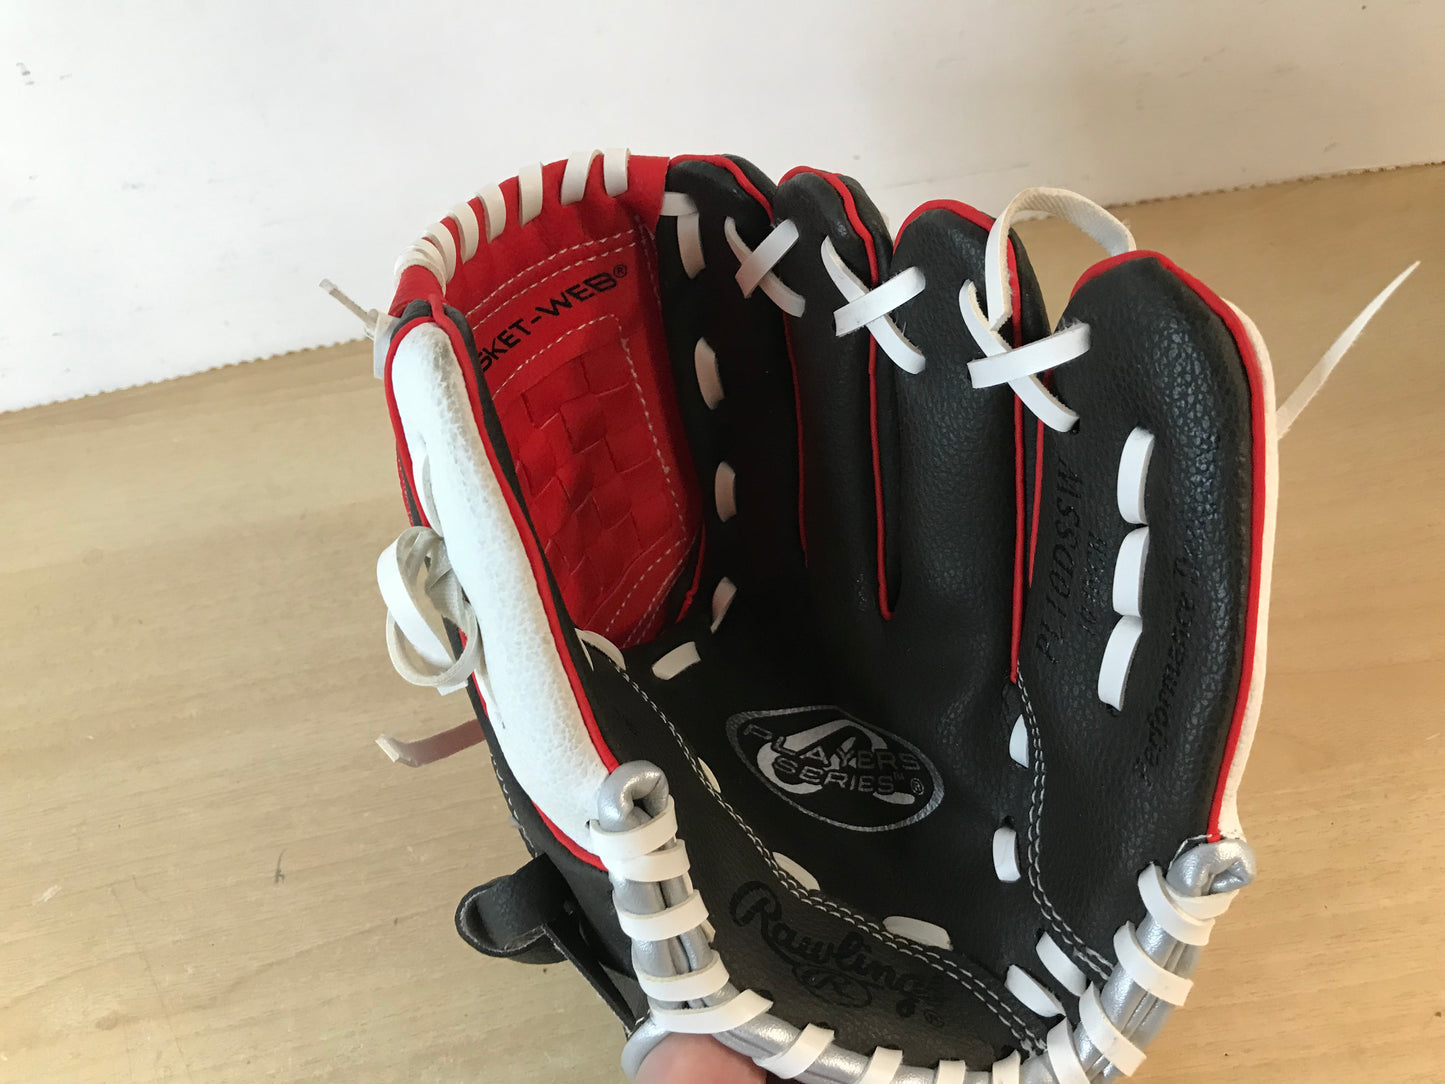 Baseball Glove Child Size 10 inch Rawlings Red Black White Fits on Left Hand Vinyl New Demo Model